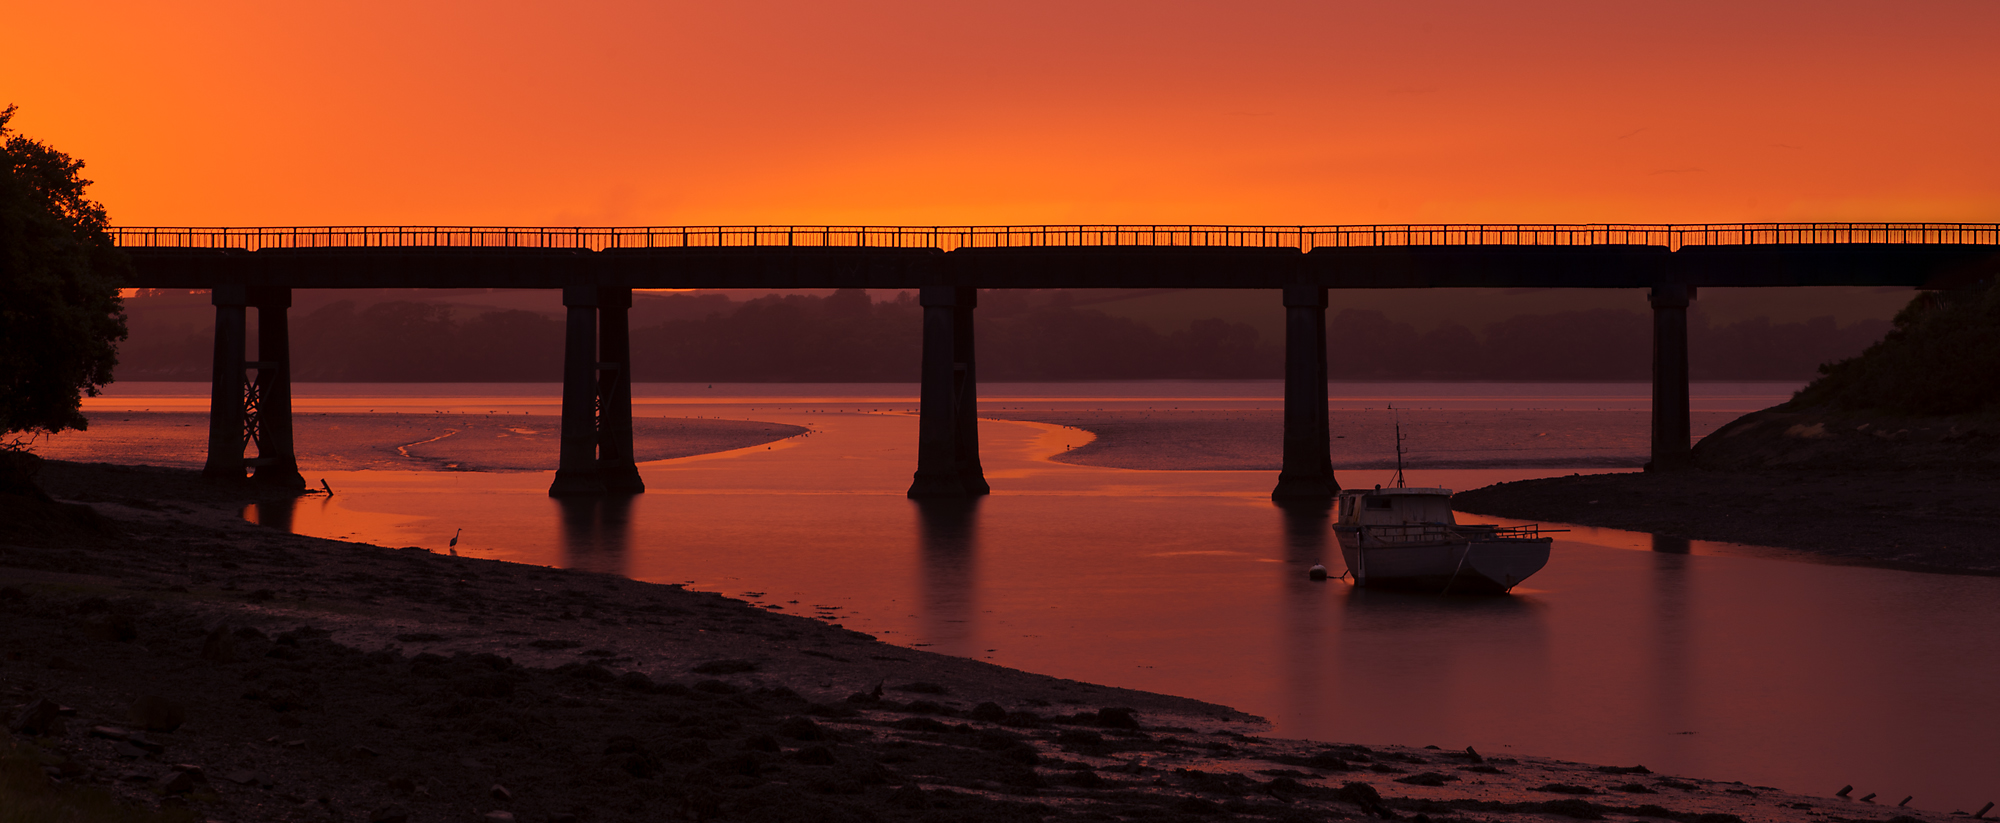 Bridge at sunset photo